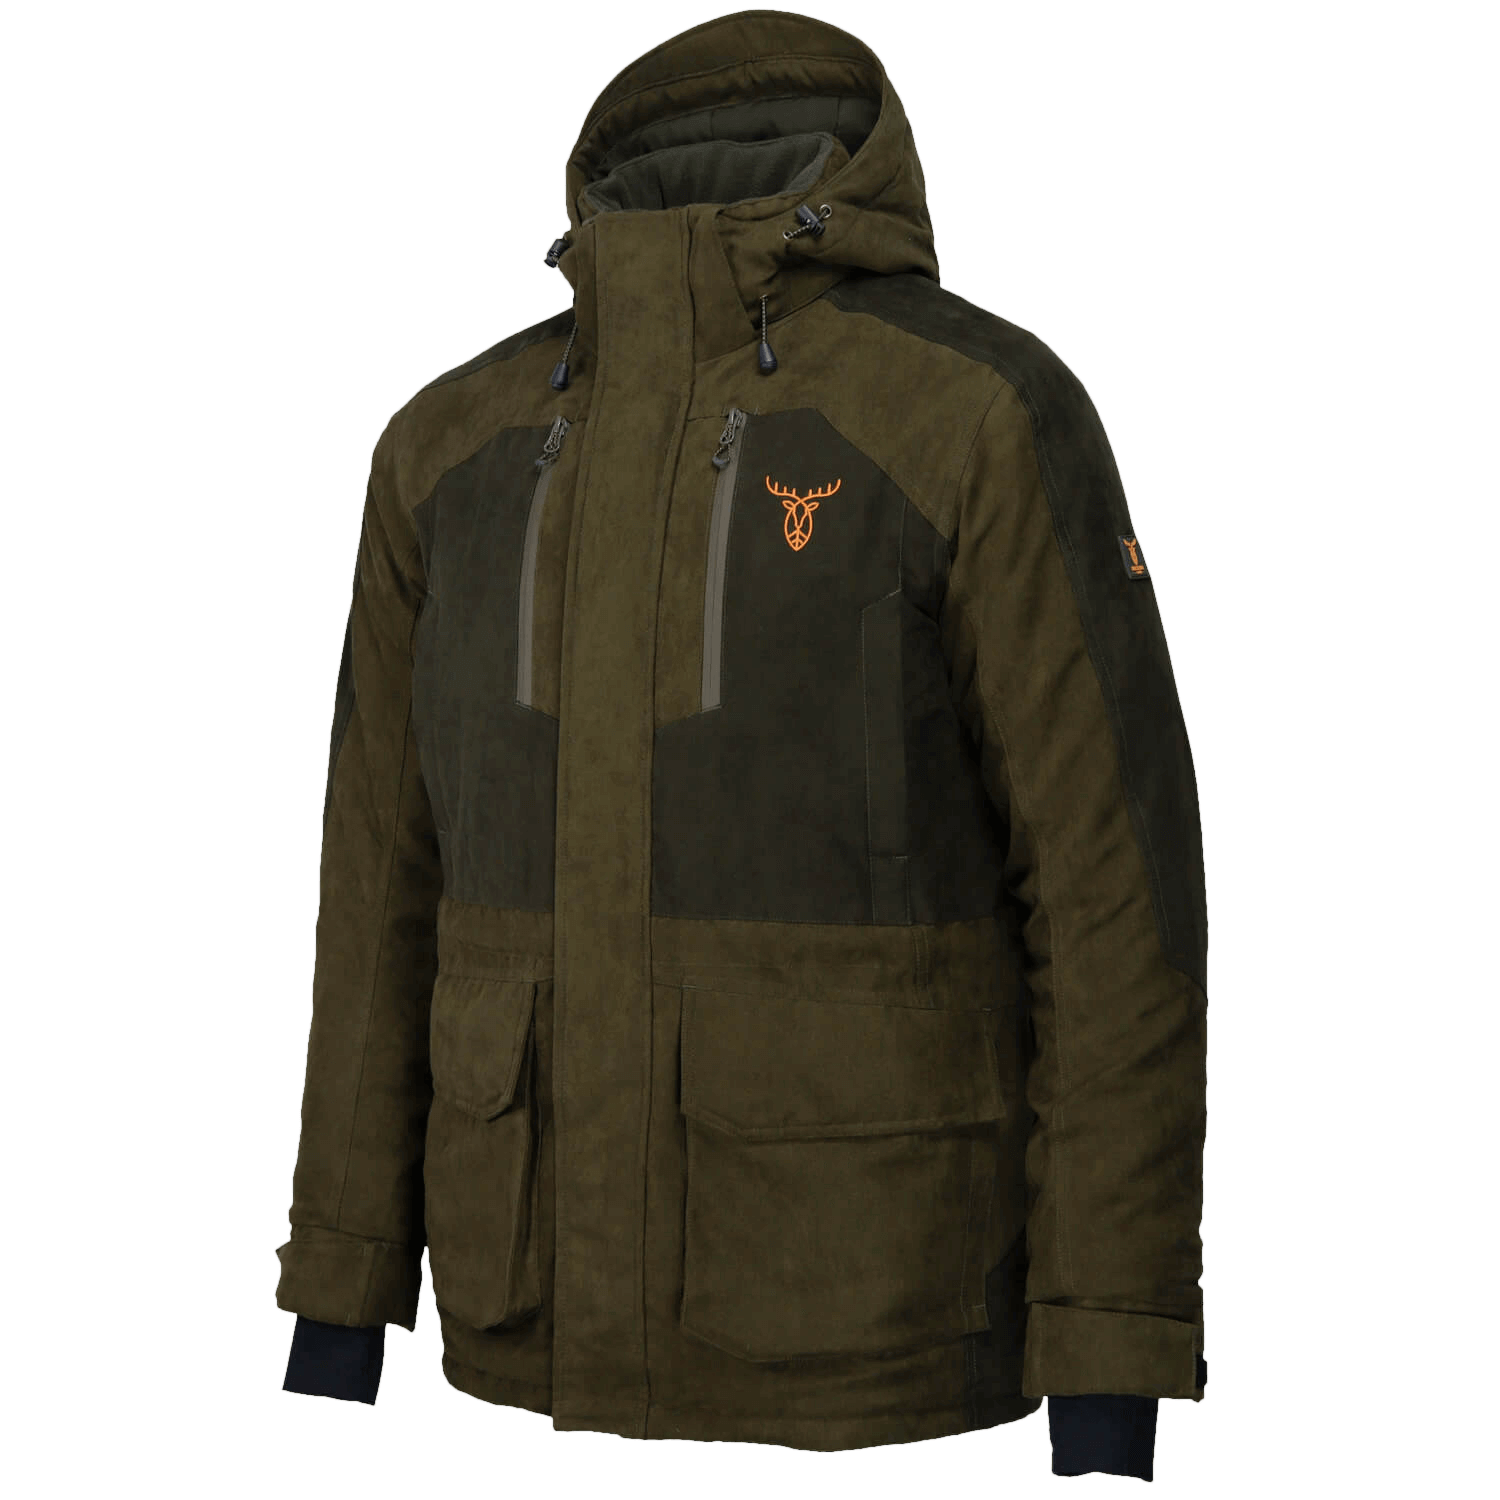 Pirscher Gear Polar Winter Jacket - Winter Hunting Clothing